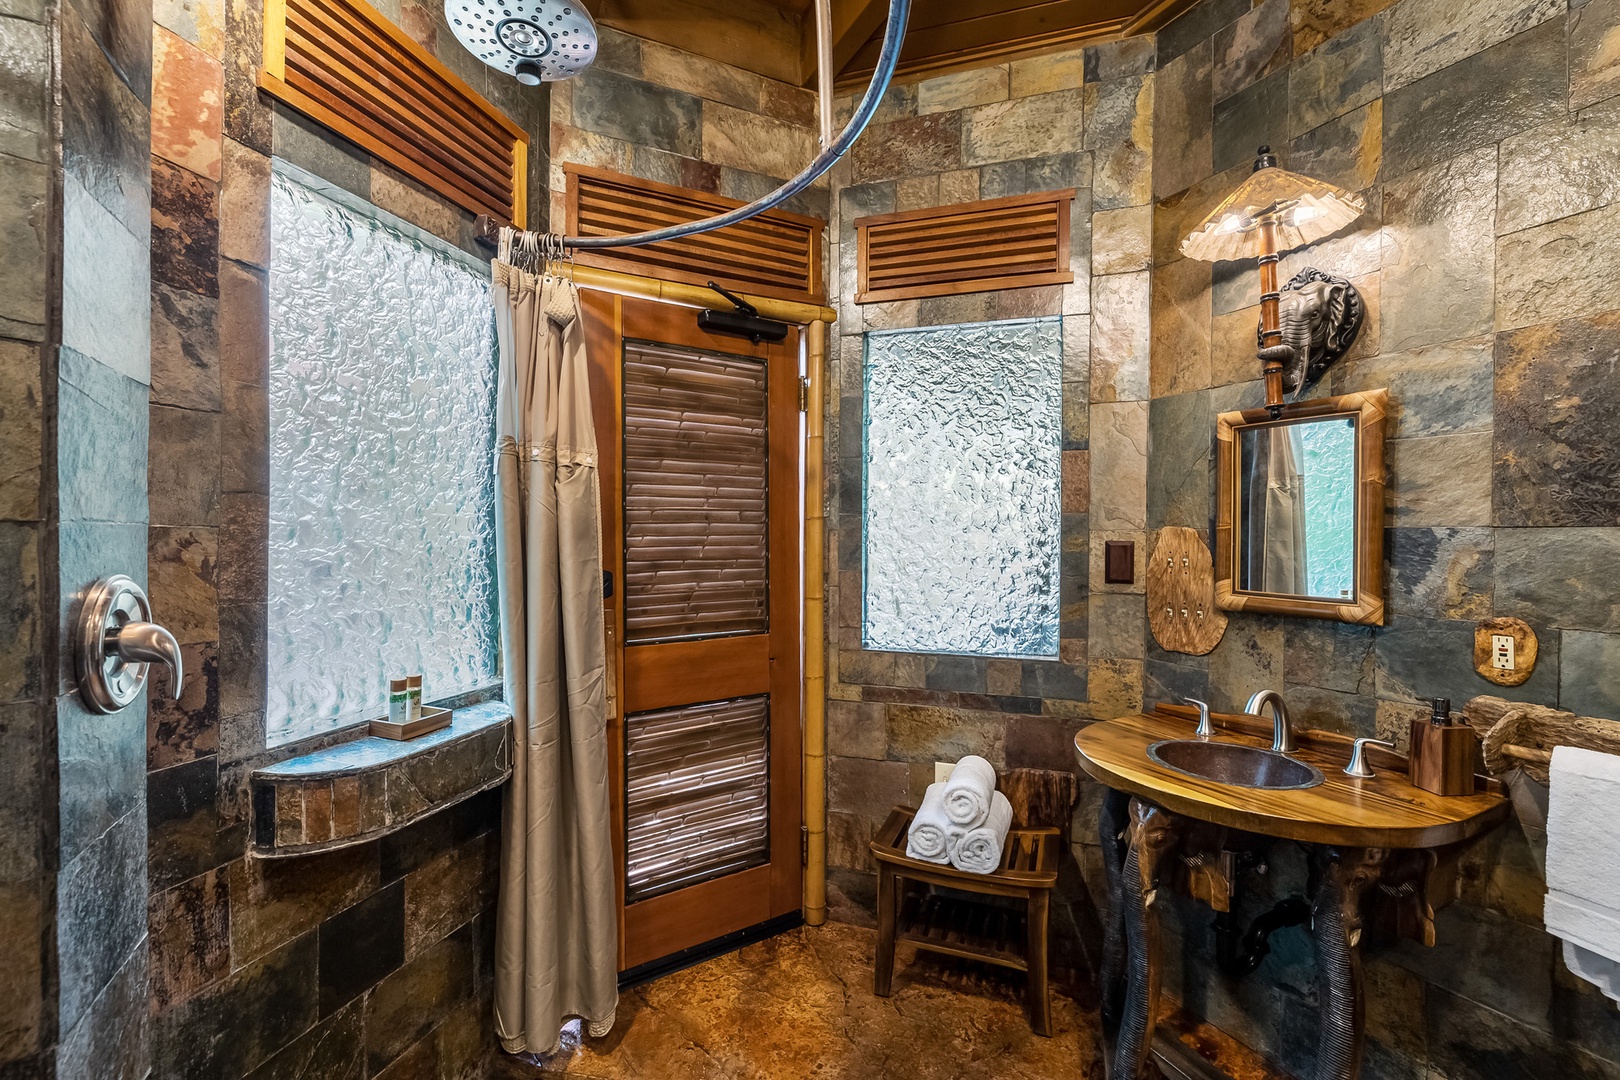 Waimanalo Vacation Rentals, Hawaii Hobbit House - Full-size guest bathroom.